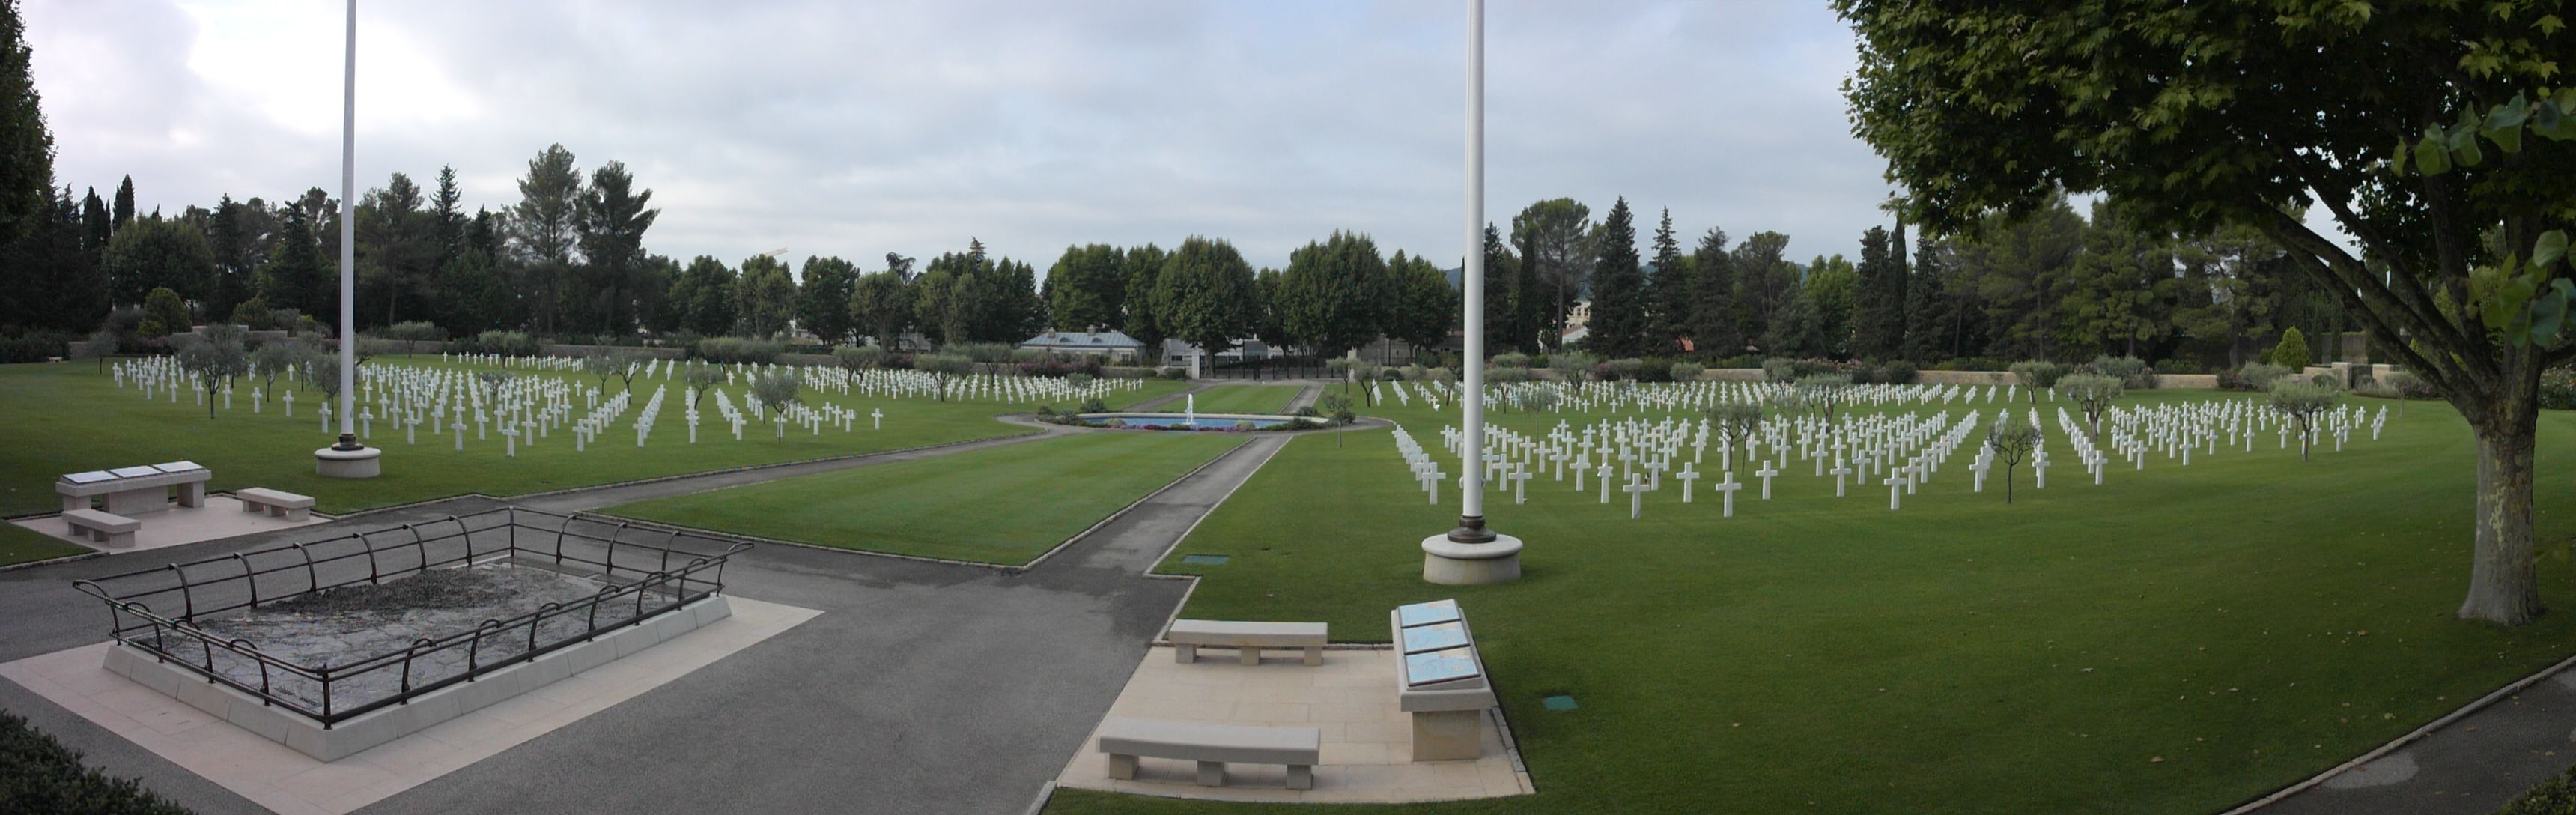 Panorama du cimetière américain